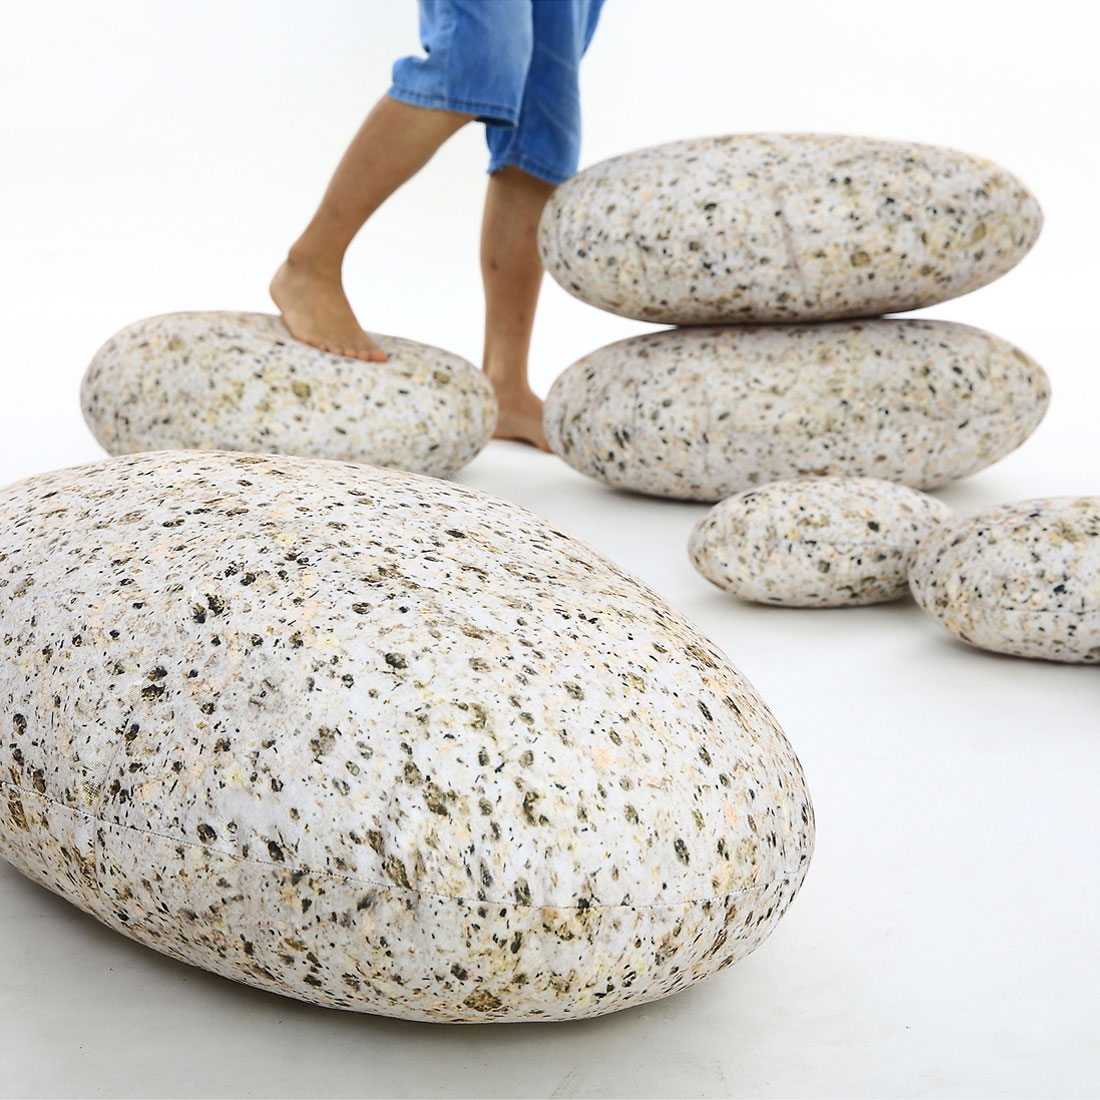 Pebble Pillows Decorative Rock Cushions 